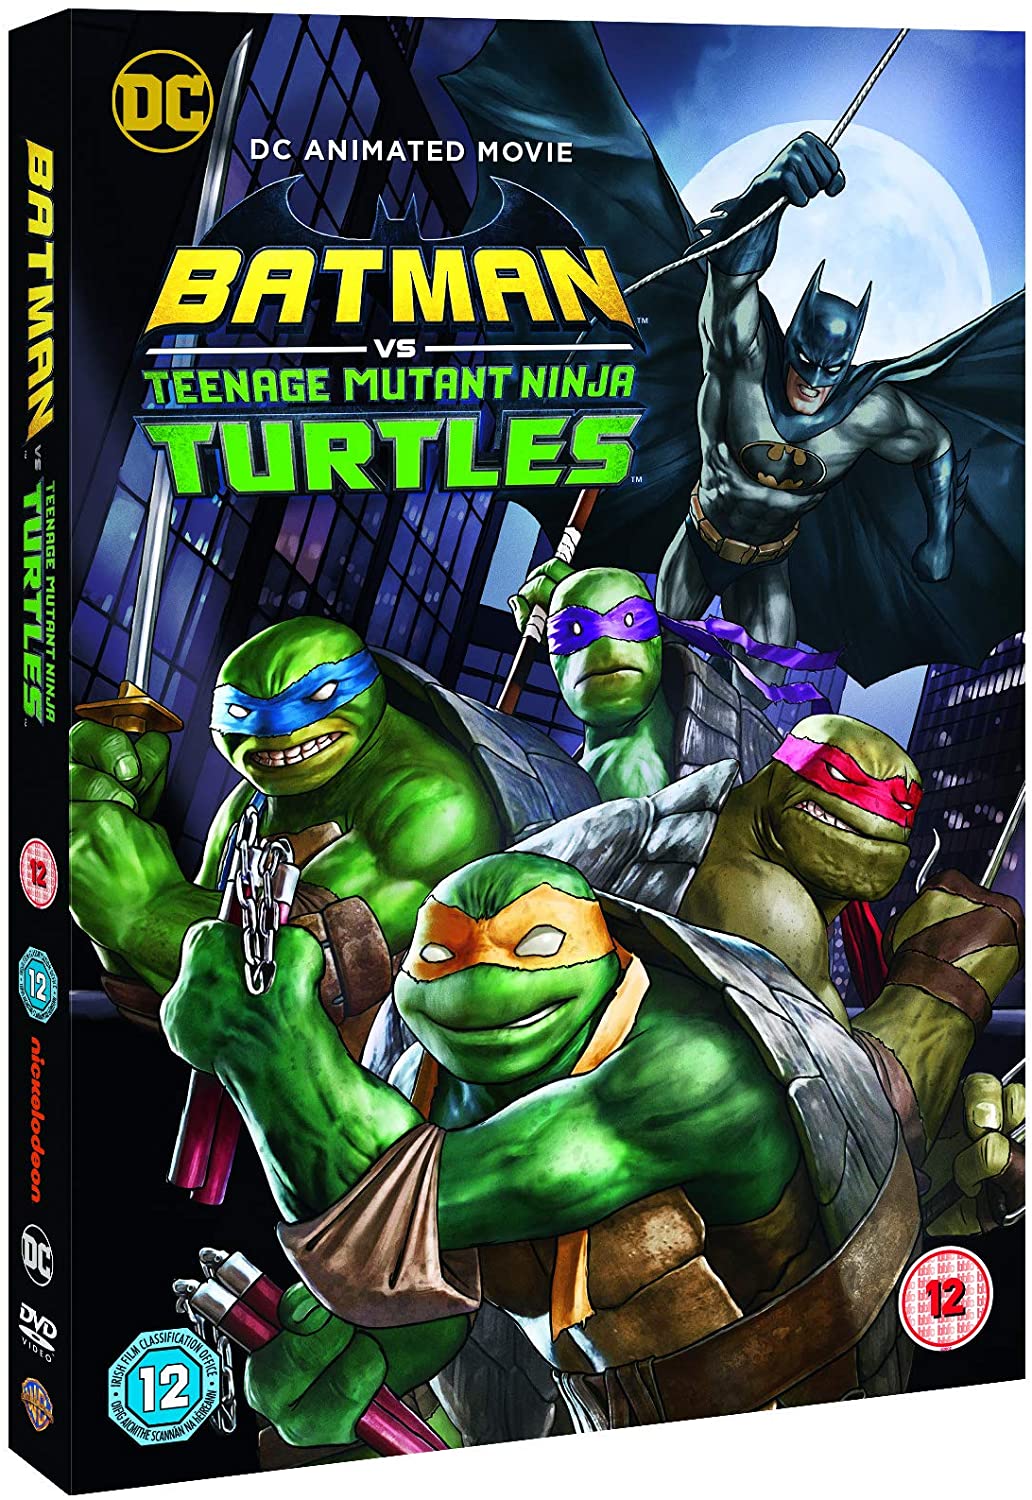 https://static.wikia.nocookie.net/fanmade-films-4/images/1/1b/Batman_vs_Teenage_Mutant_Ninja_Turtles_2019_UK_DVD_cover.jpg/revision/latest?cb=20200910205527